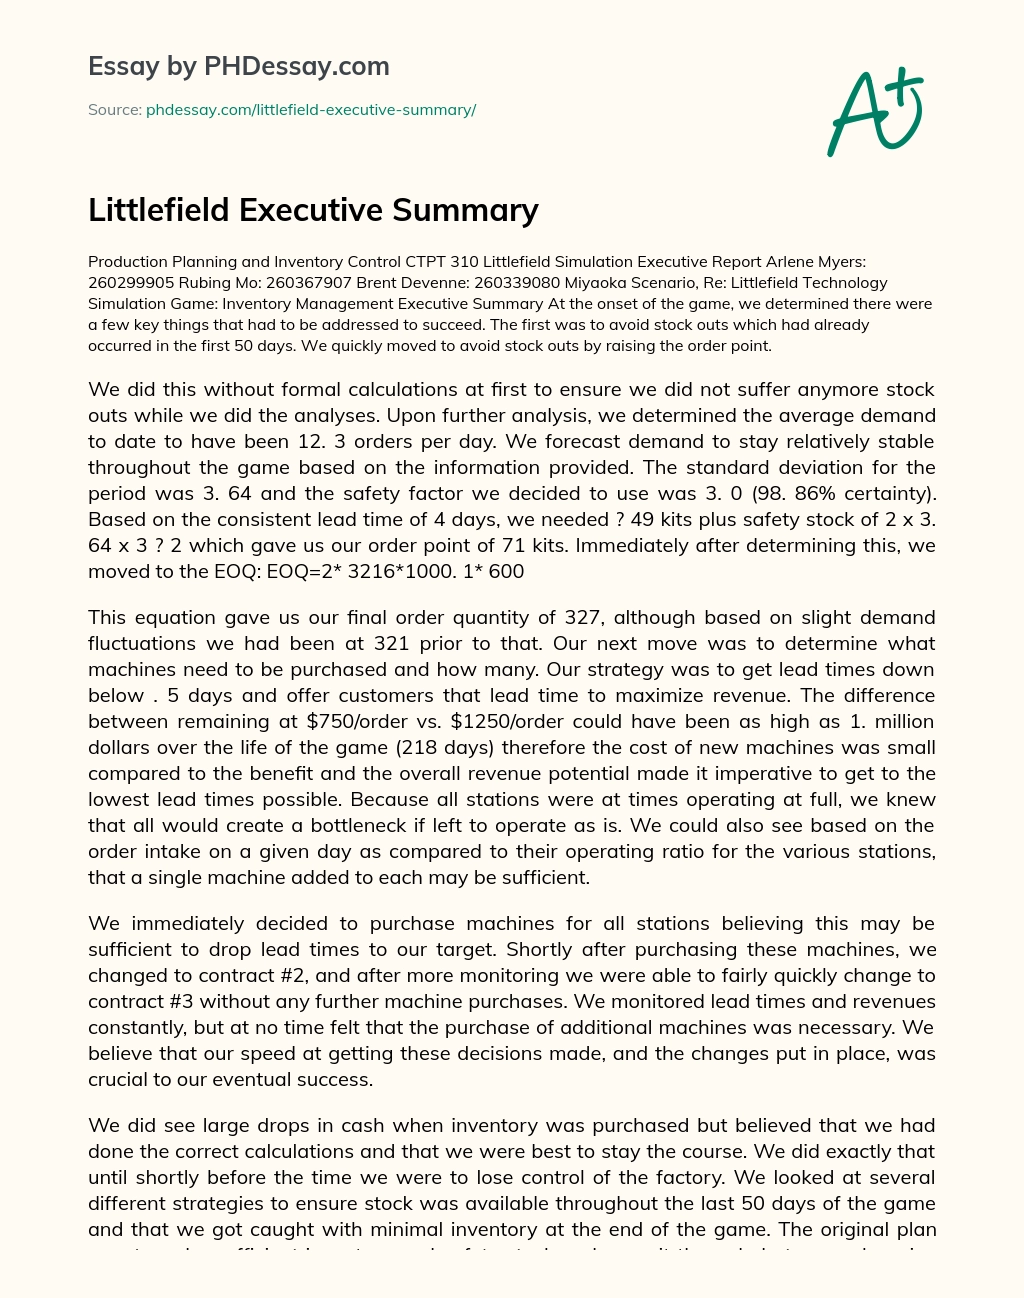 Littlefield Executive Summary essay